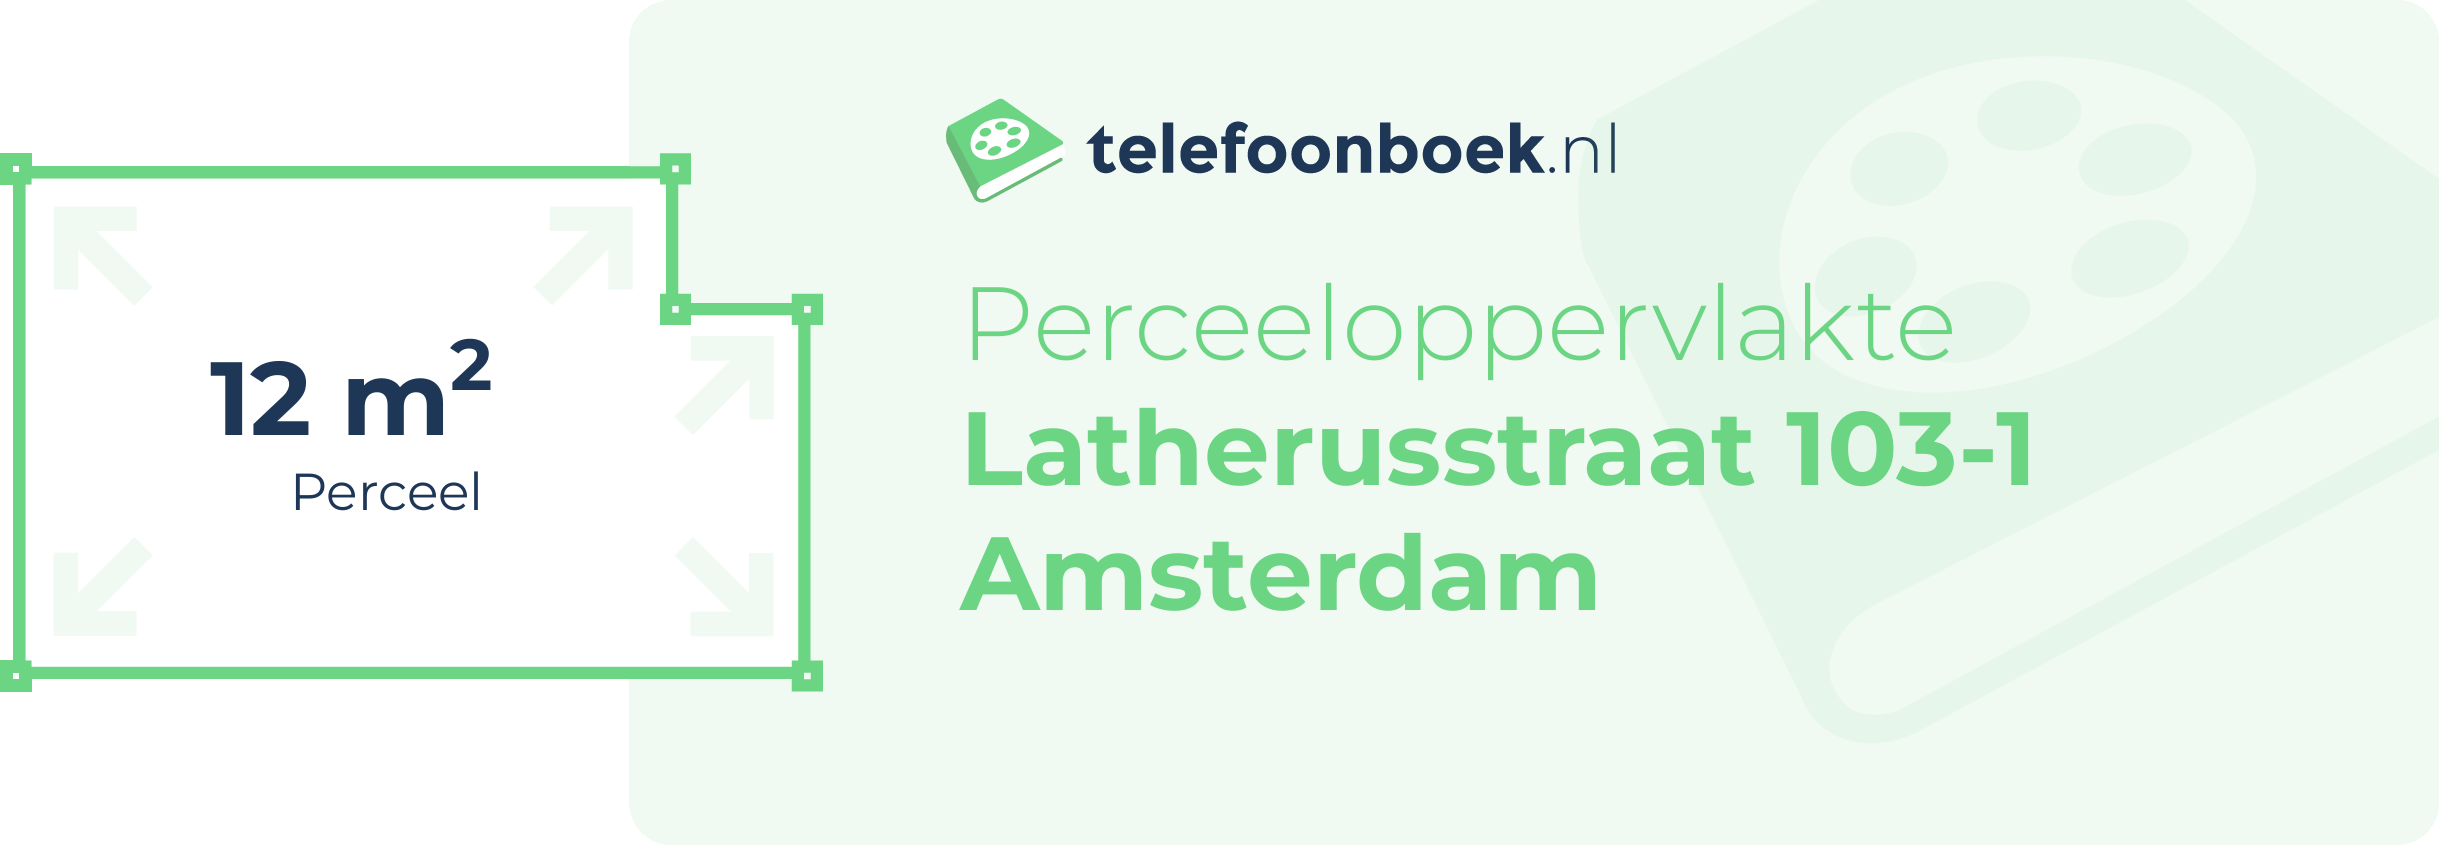 Perceeloppervlakte Latherusstraat 103-1 Amsterdam